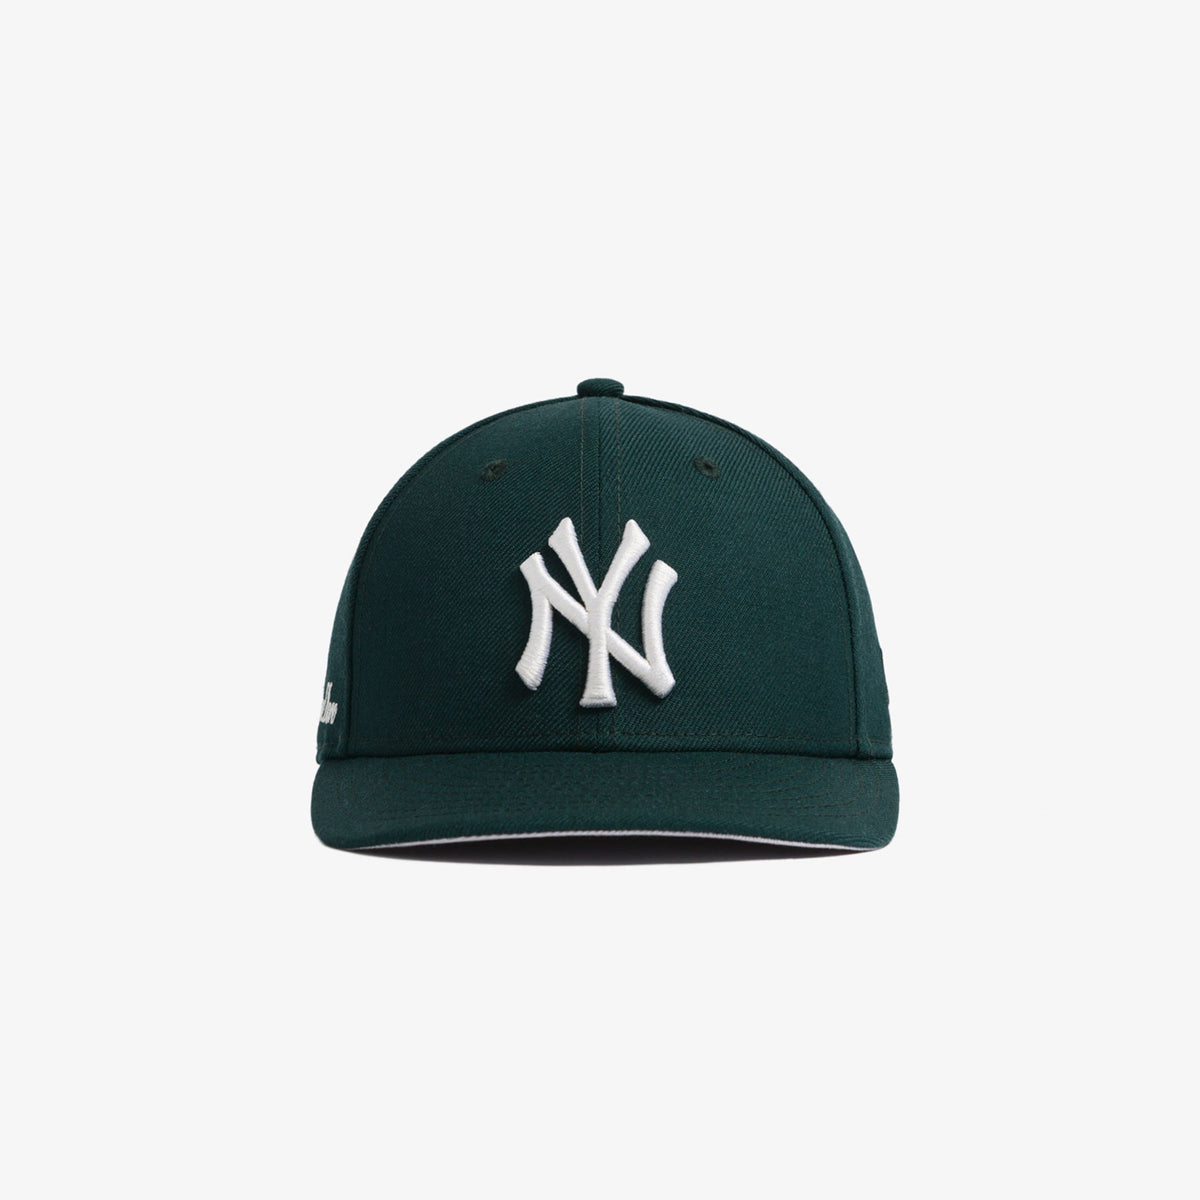 ALD / New Era Yankees Hat at AimeLeonDore.com